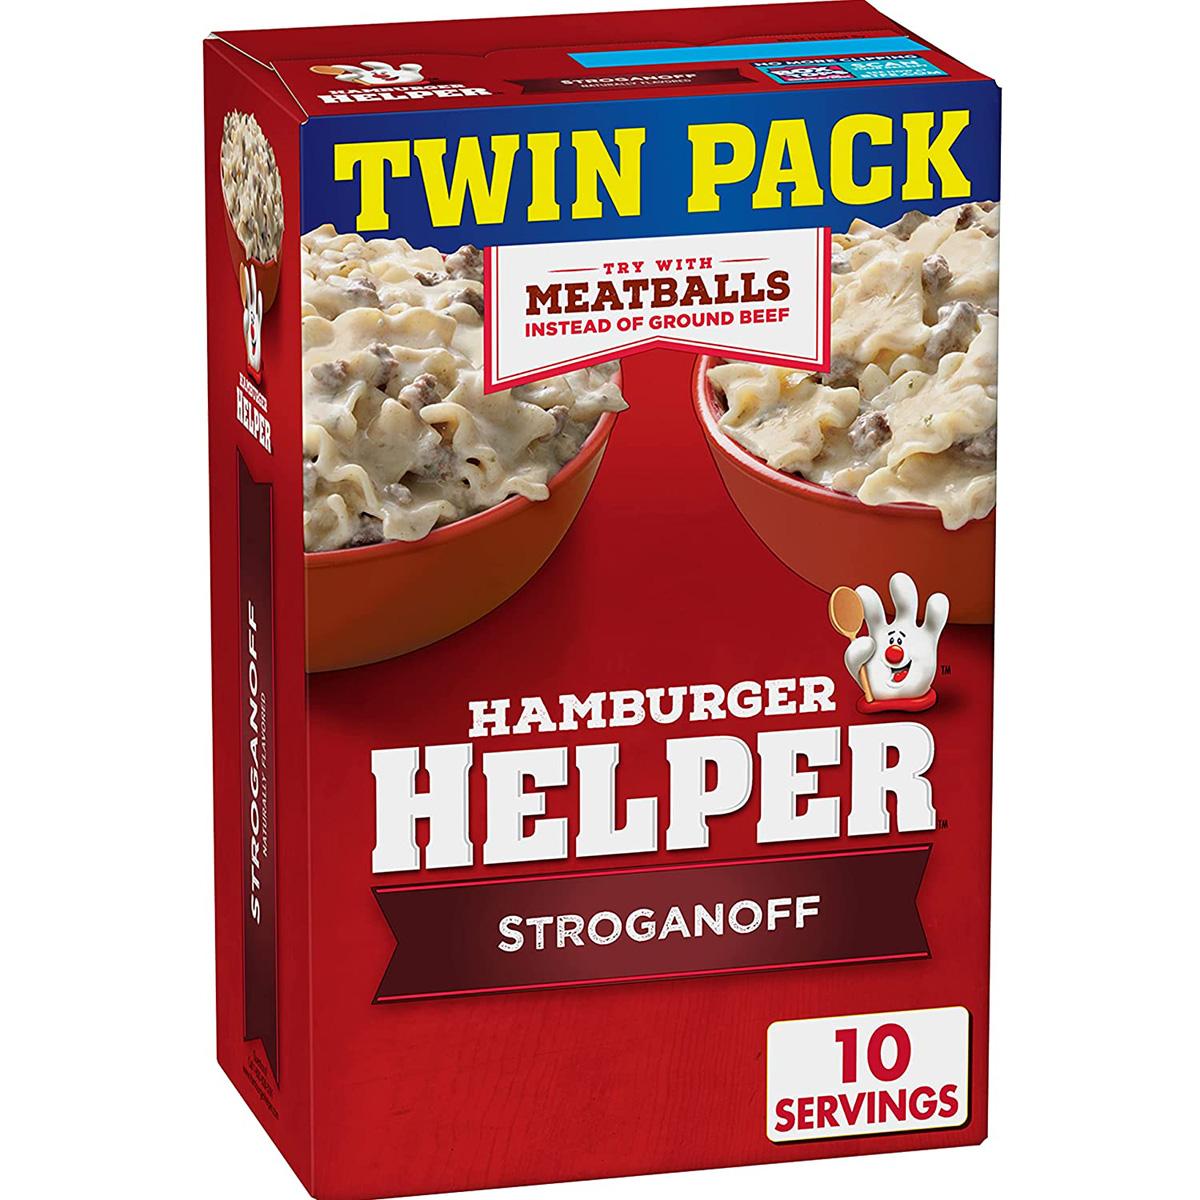 Twin Pack 13-oz Hamburger Helper Beef Stroganoff for $1.86 Shipped